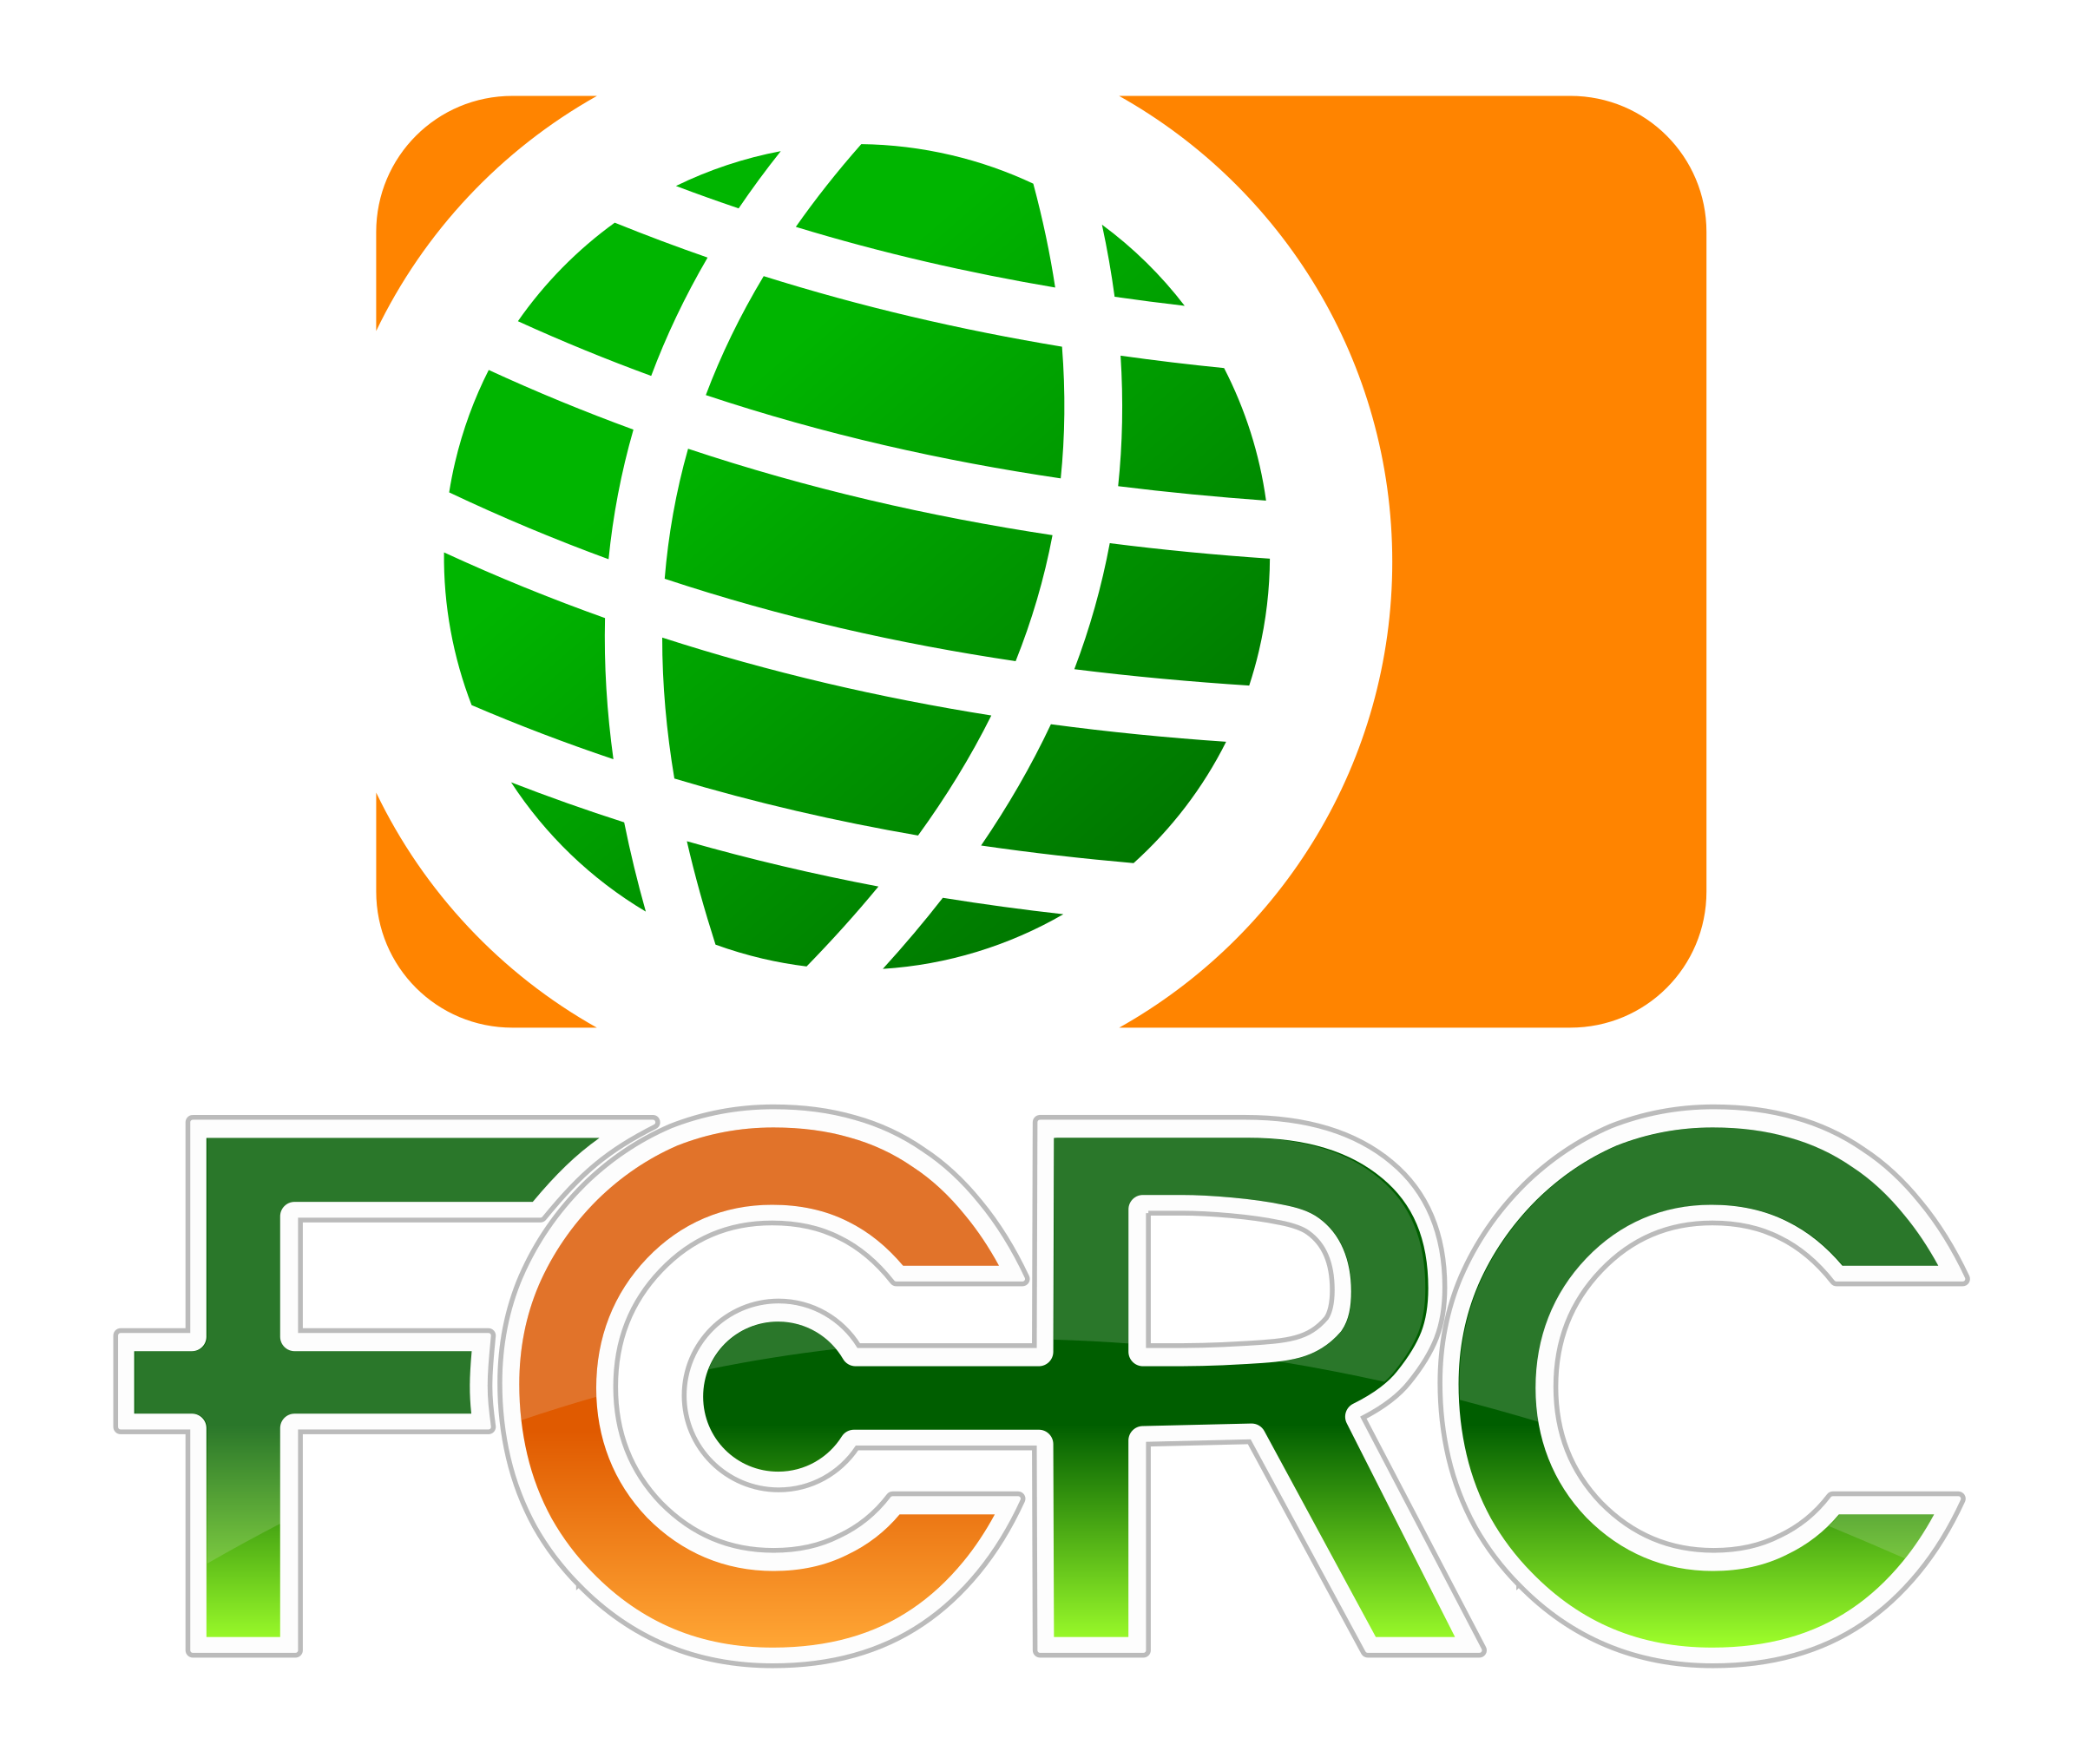 Clipart - FCRC globe logo 4